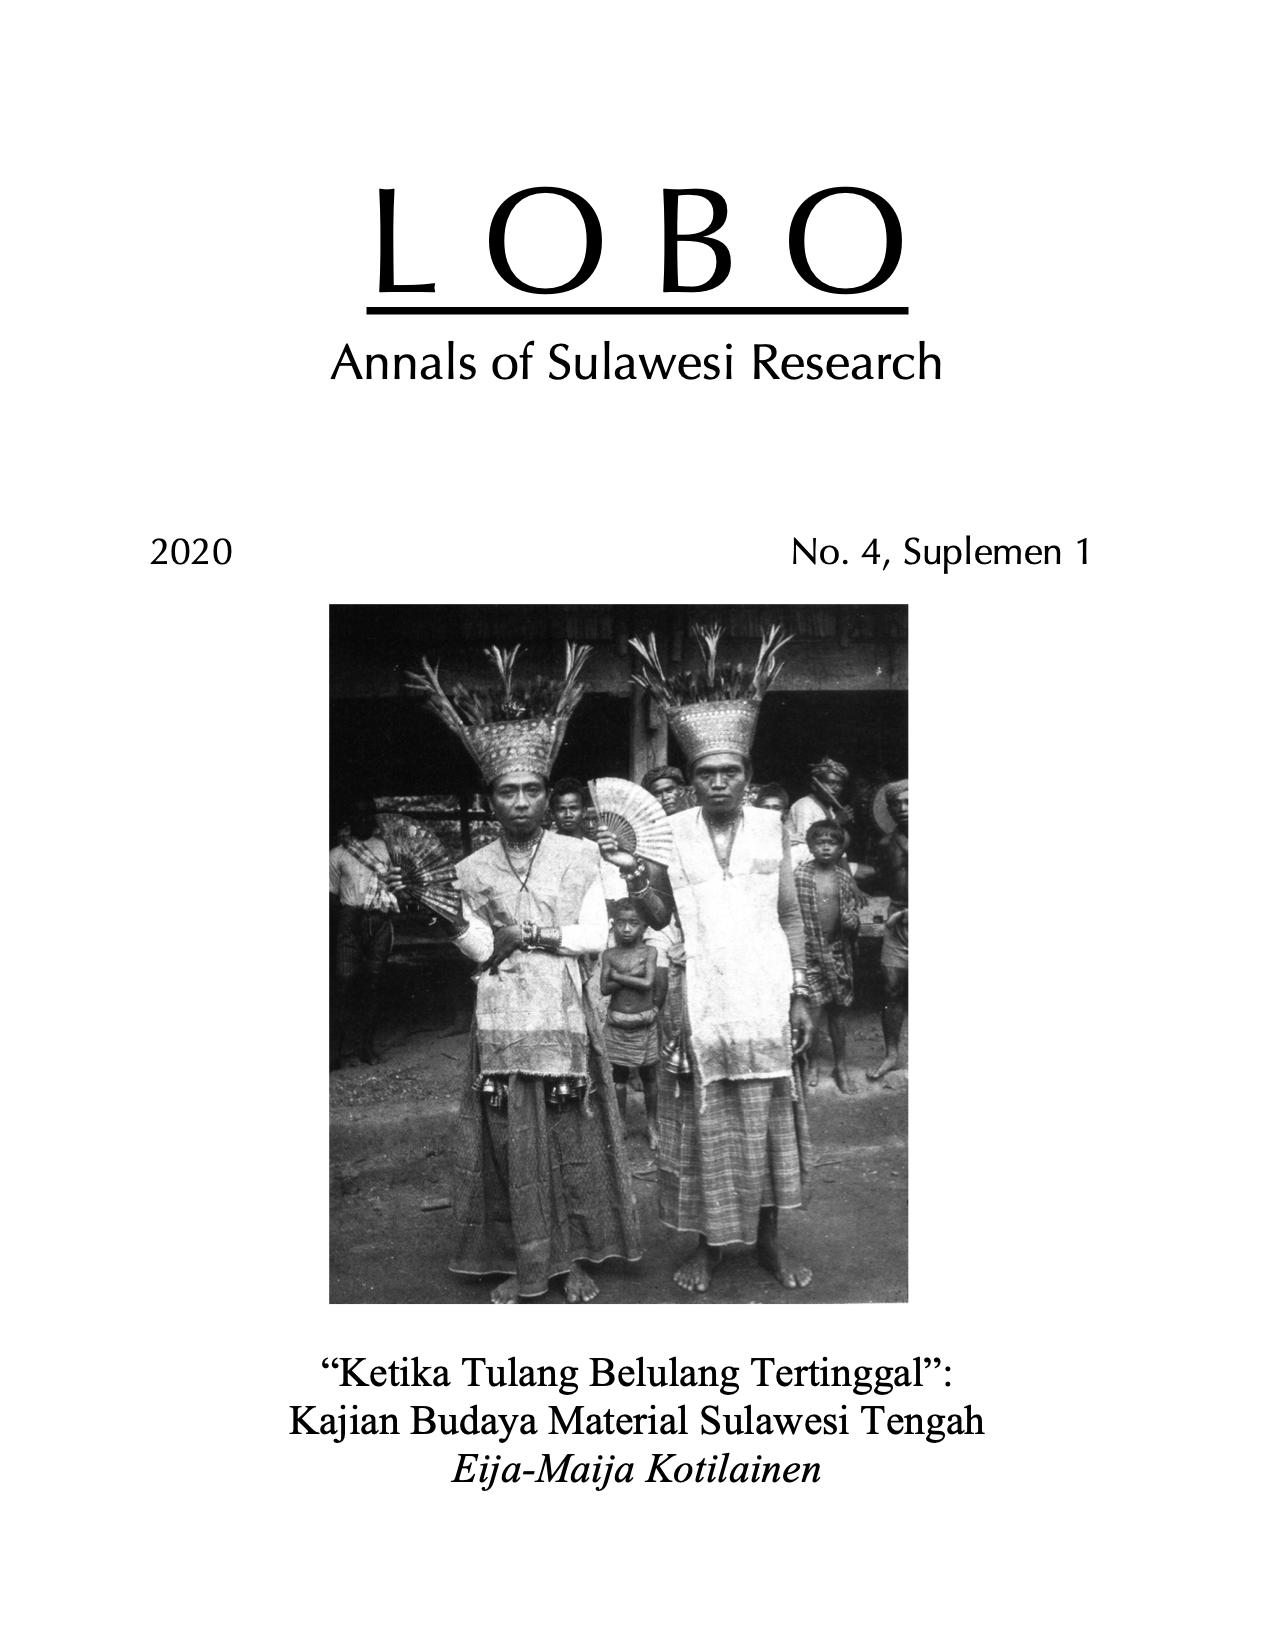 					View Vol. 4 No. S1 (2020): “Ketika Tulang Belulang Tertinggal”: Kajian Budaya Material Sulawesi Tengah
				